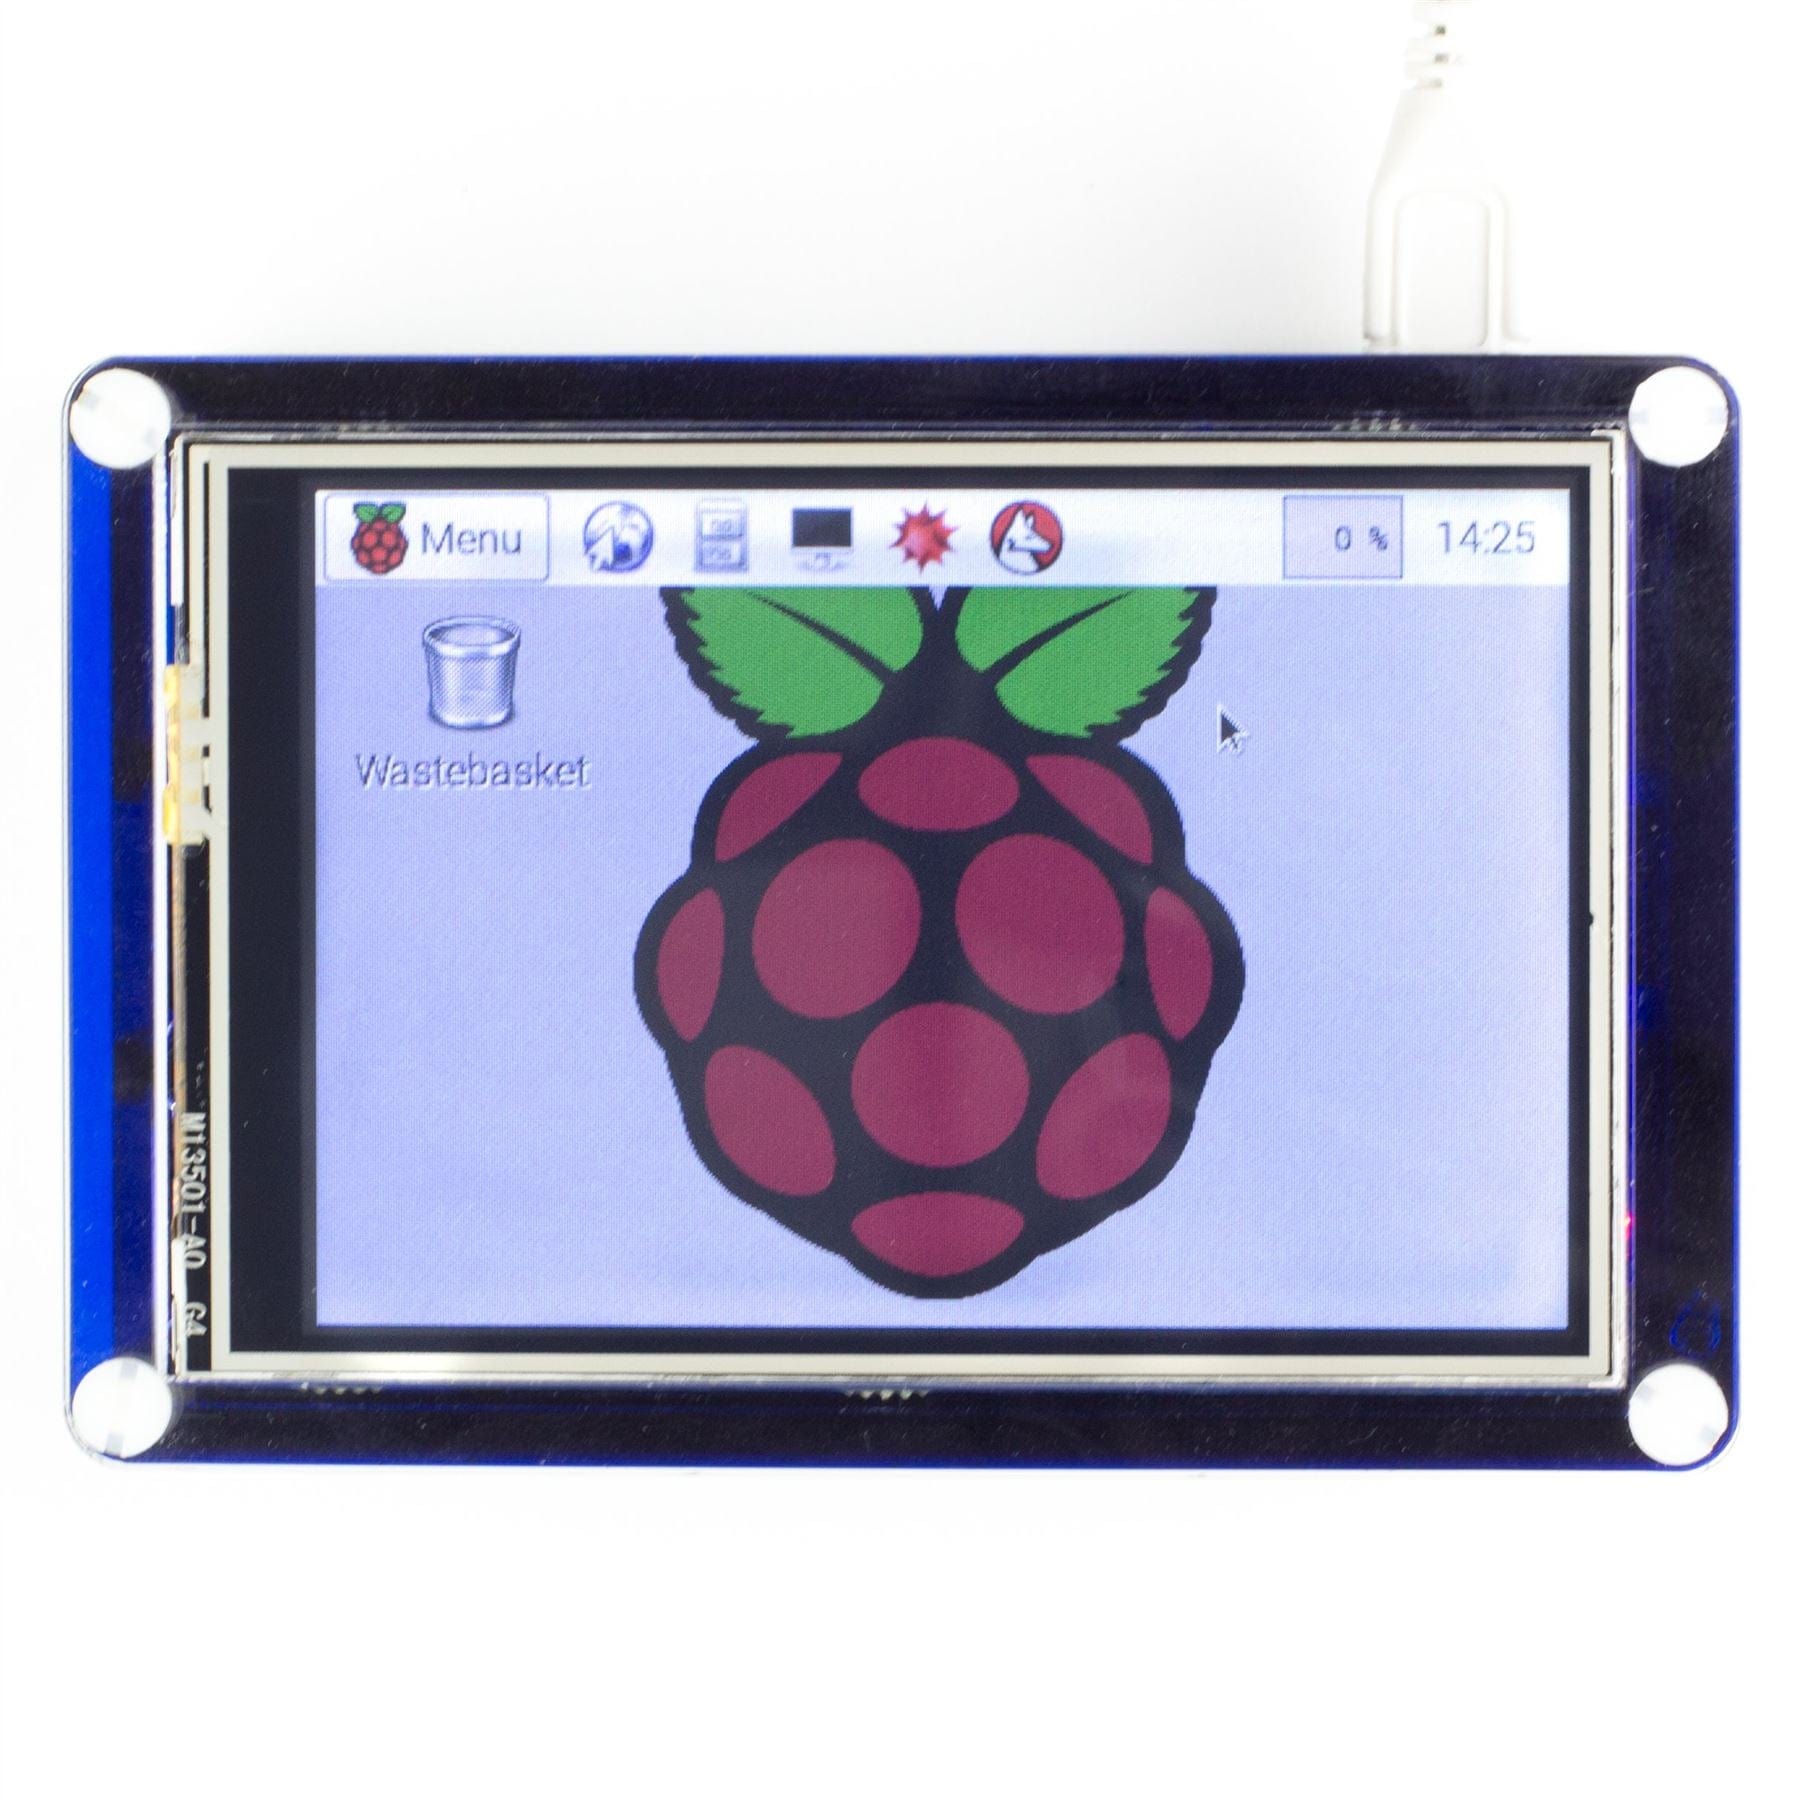 Pibow PiTFT+ for Raspberry Pi 3/3B+ - The Pi Hut